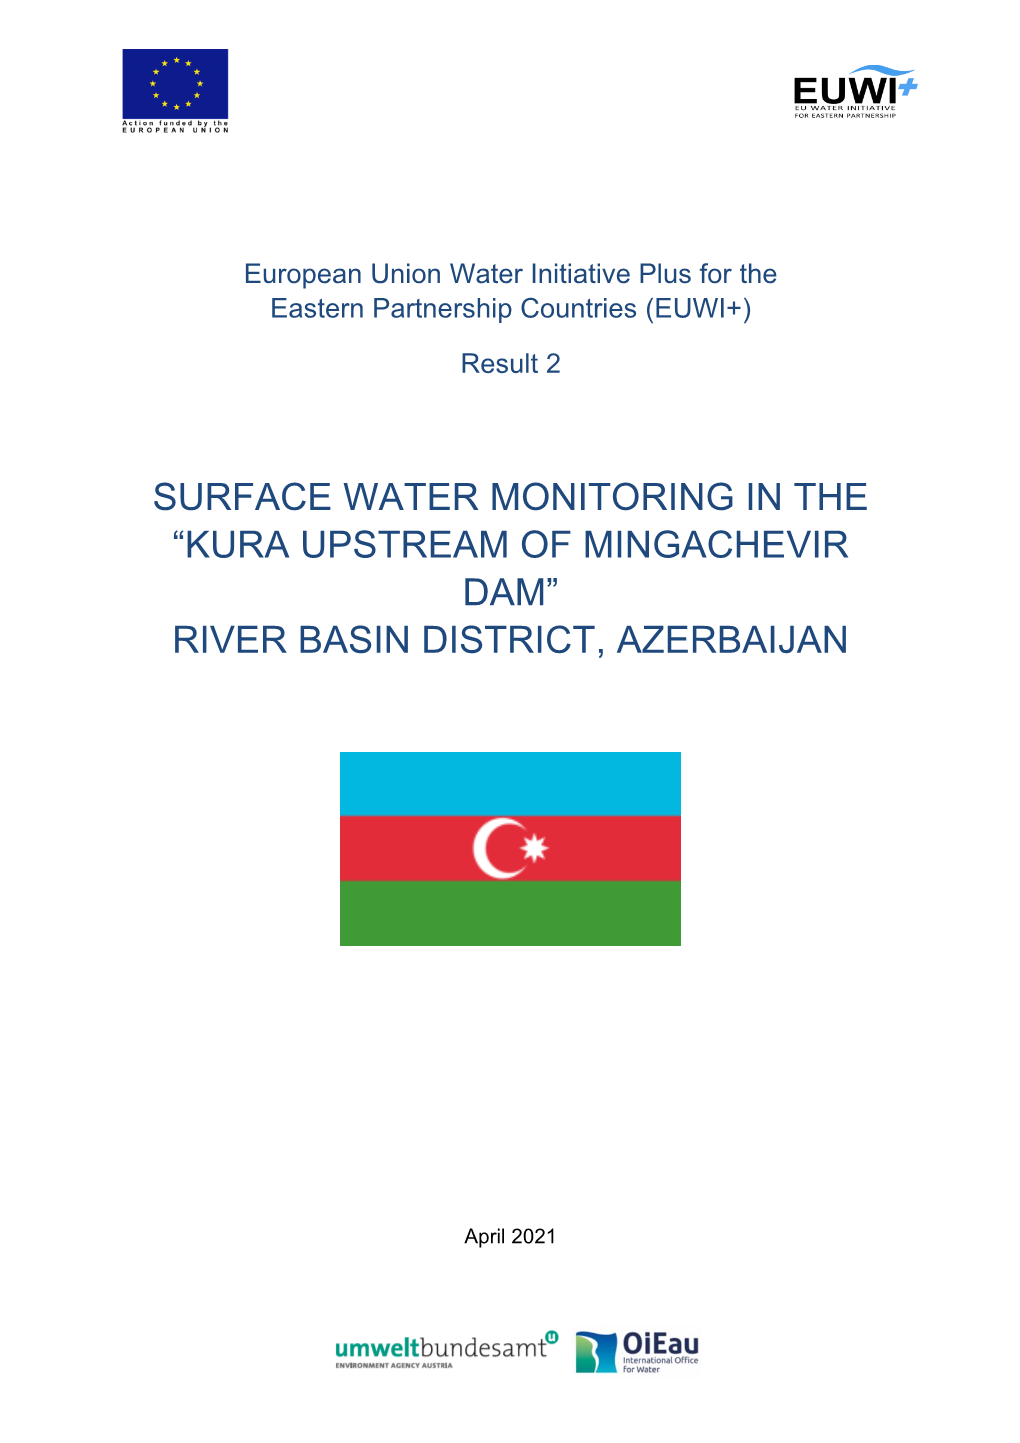 Surface Water Monitoring in the “Kura Upstream of Mingachevir Dam” River Basin District, Azerbaijan